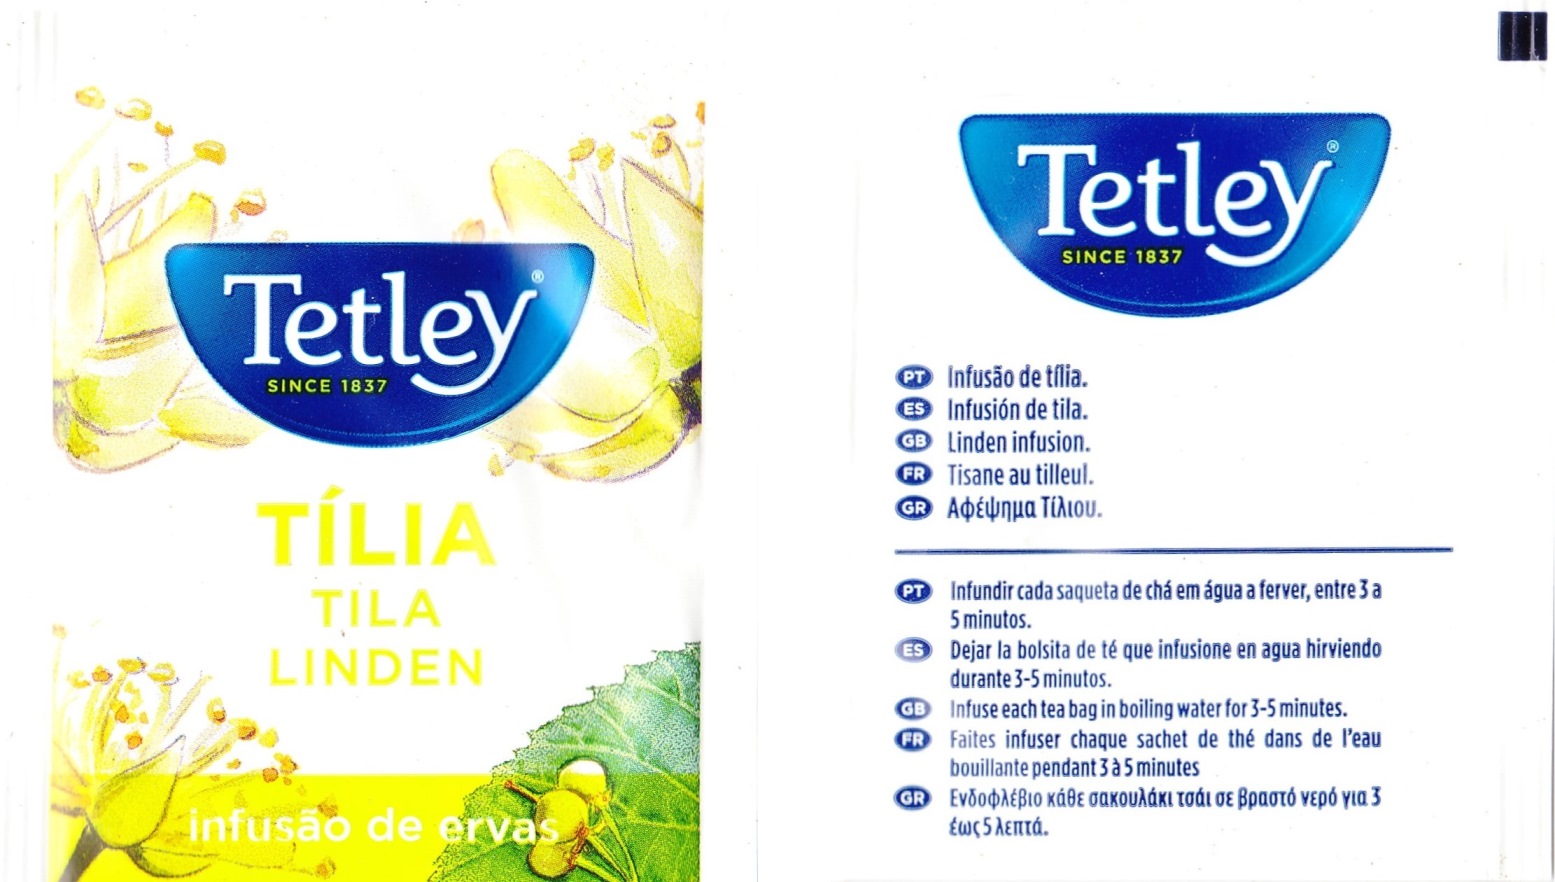 Tetley - Tília